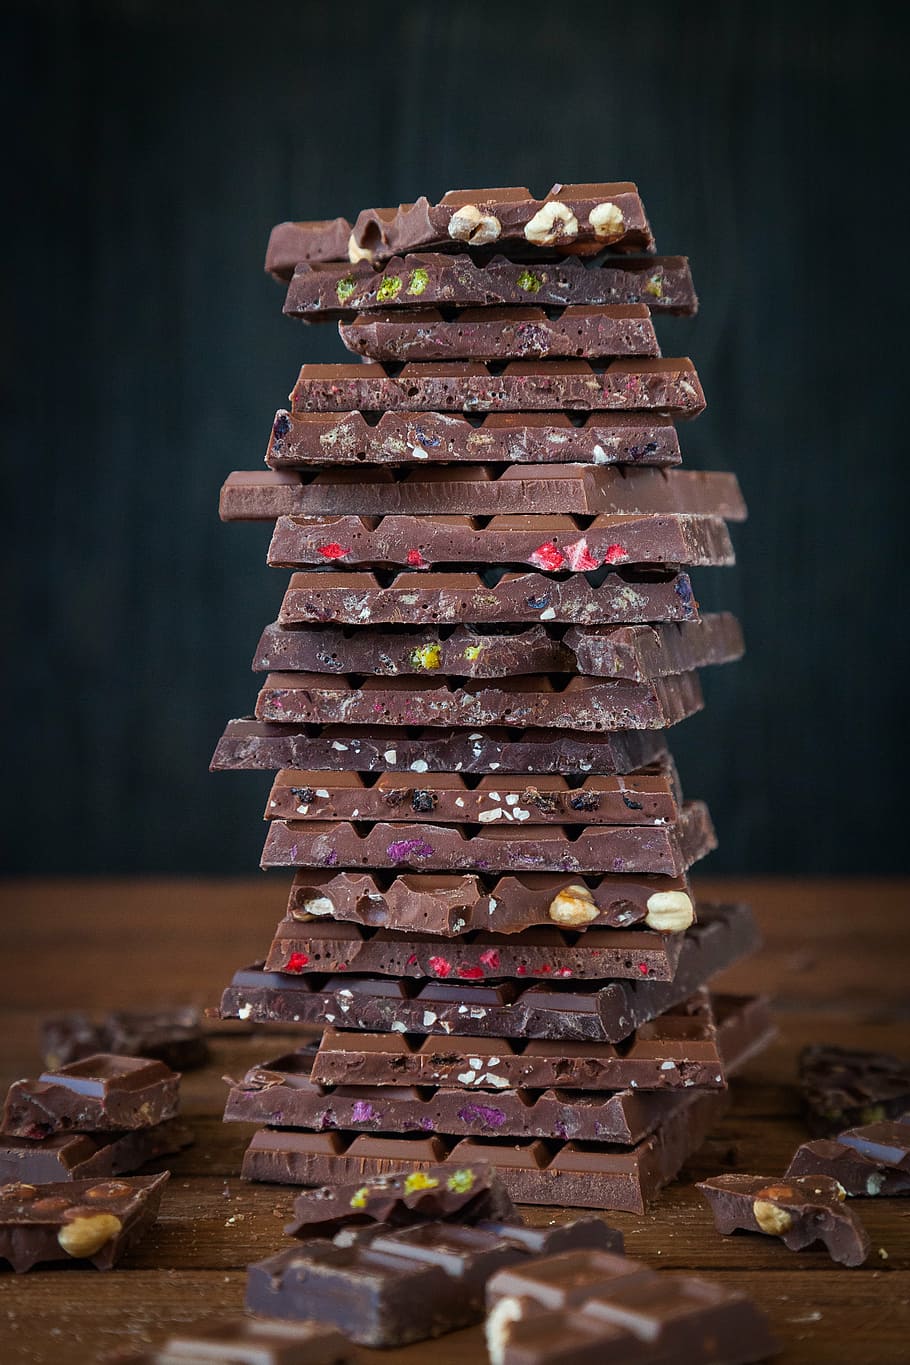 pile, chocolate bars, chocolate, abundance, sweets, candy, food, chocolate candy, dessert, products